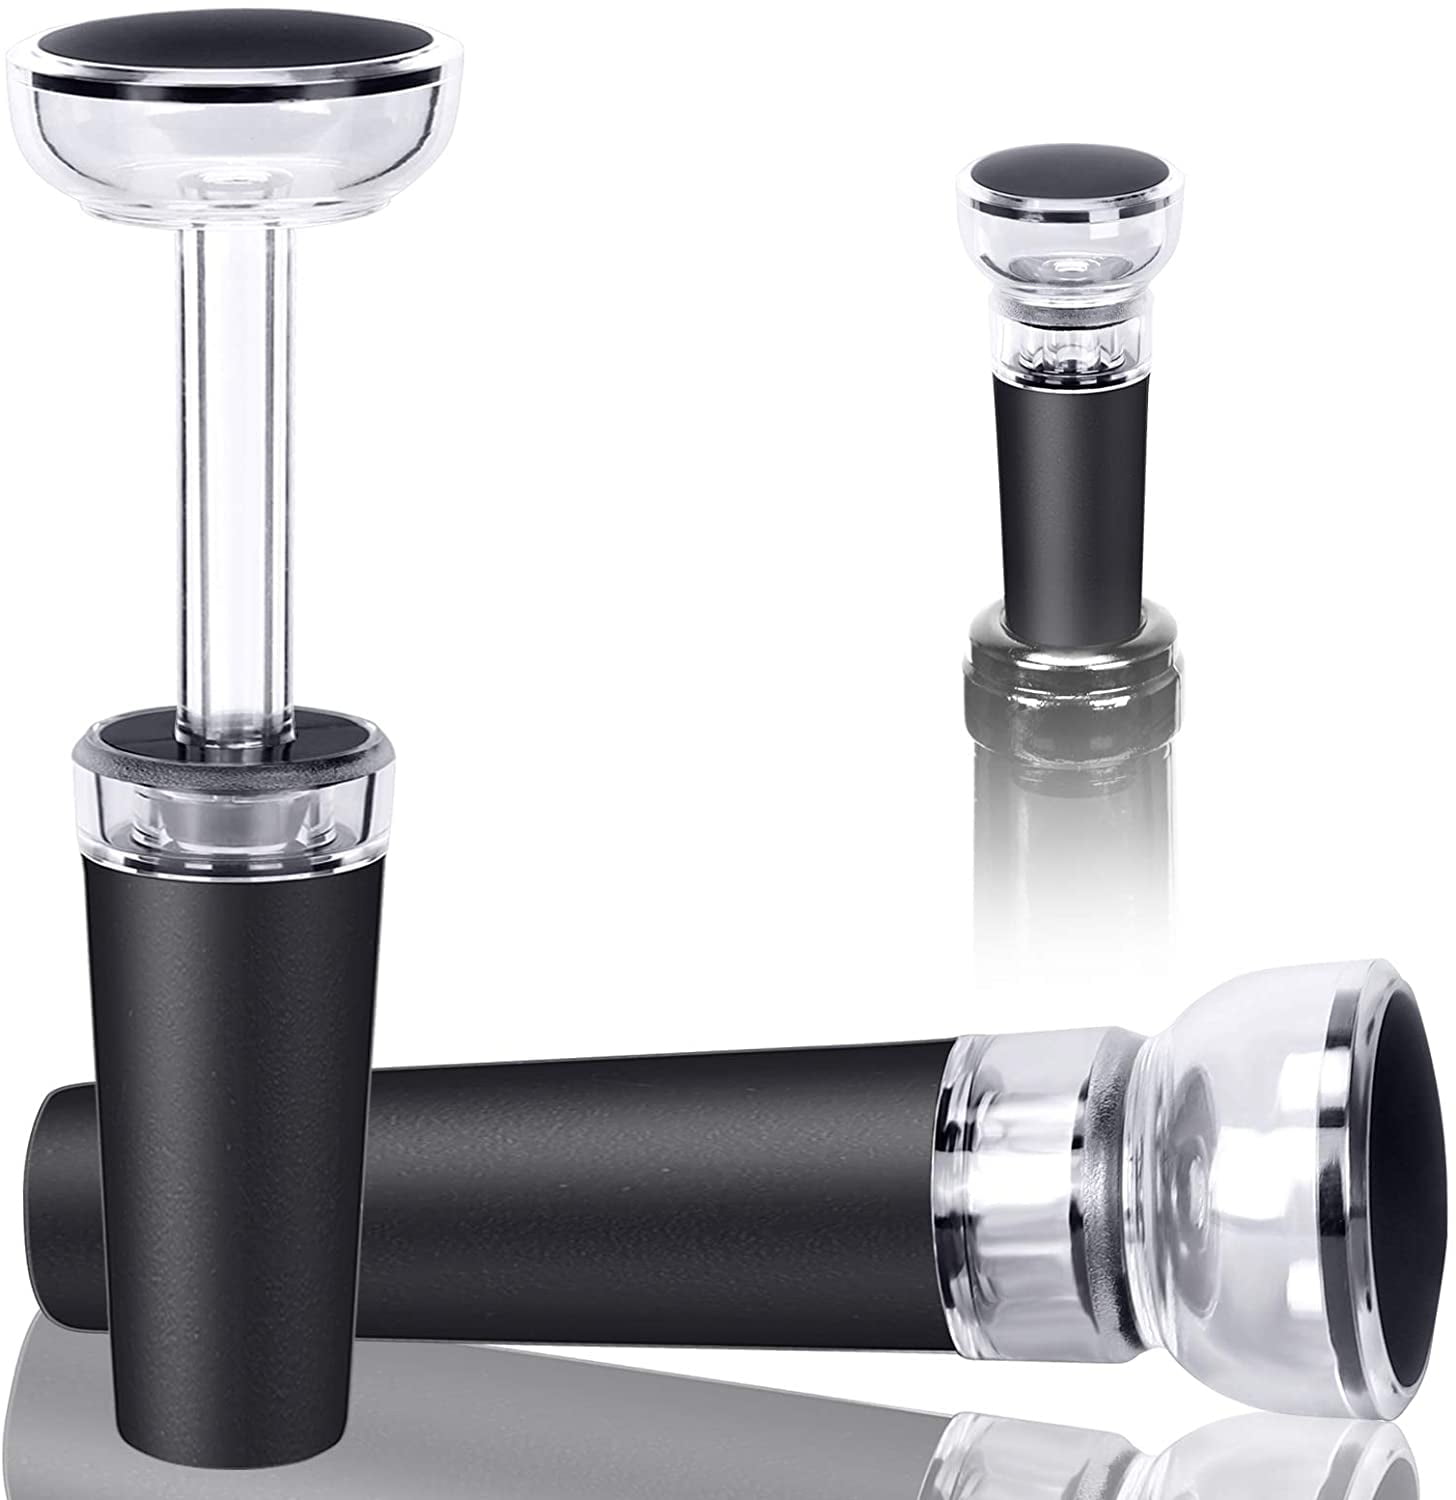 New Reusable Bottle Black Vacuum Pump Cap Stopper Red Wine Sealer Airtight